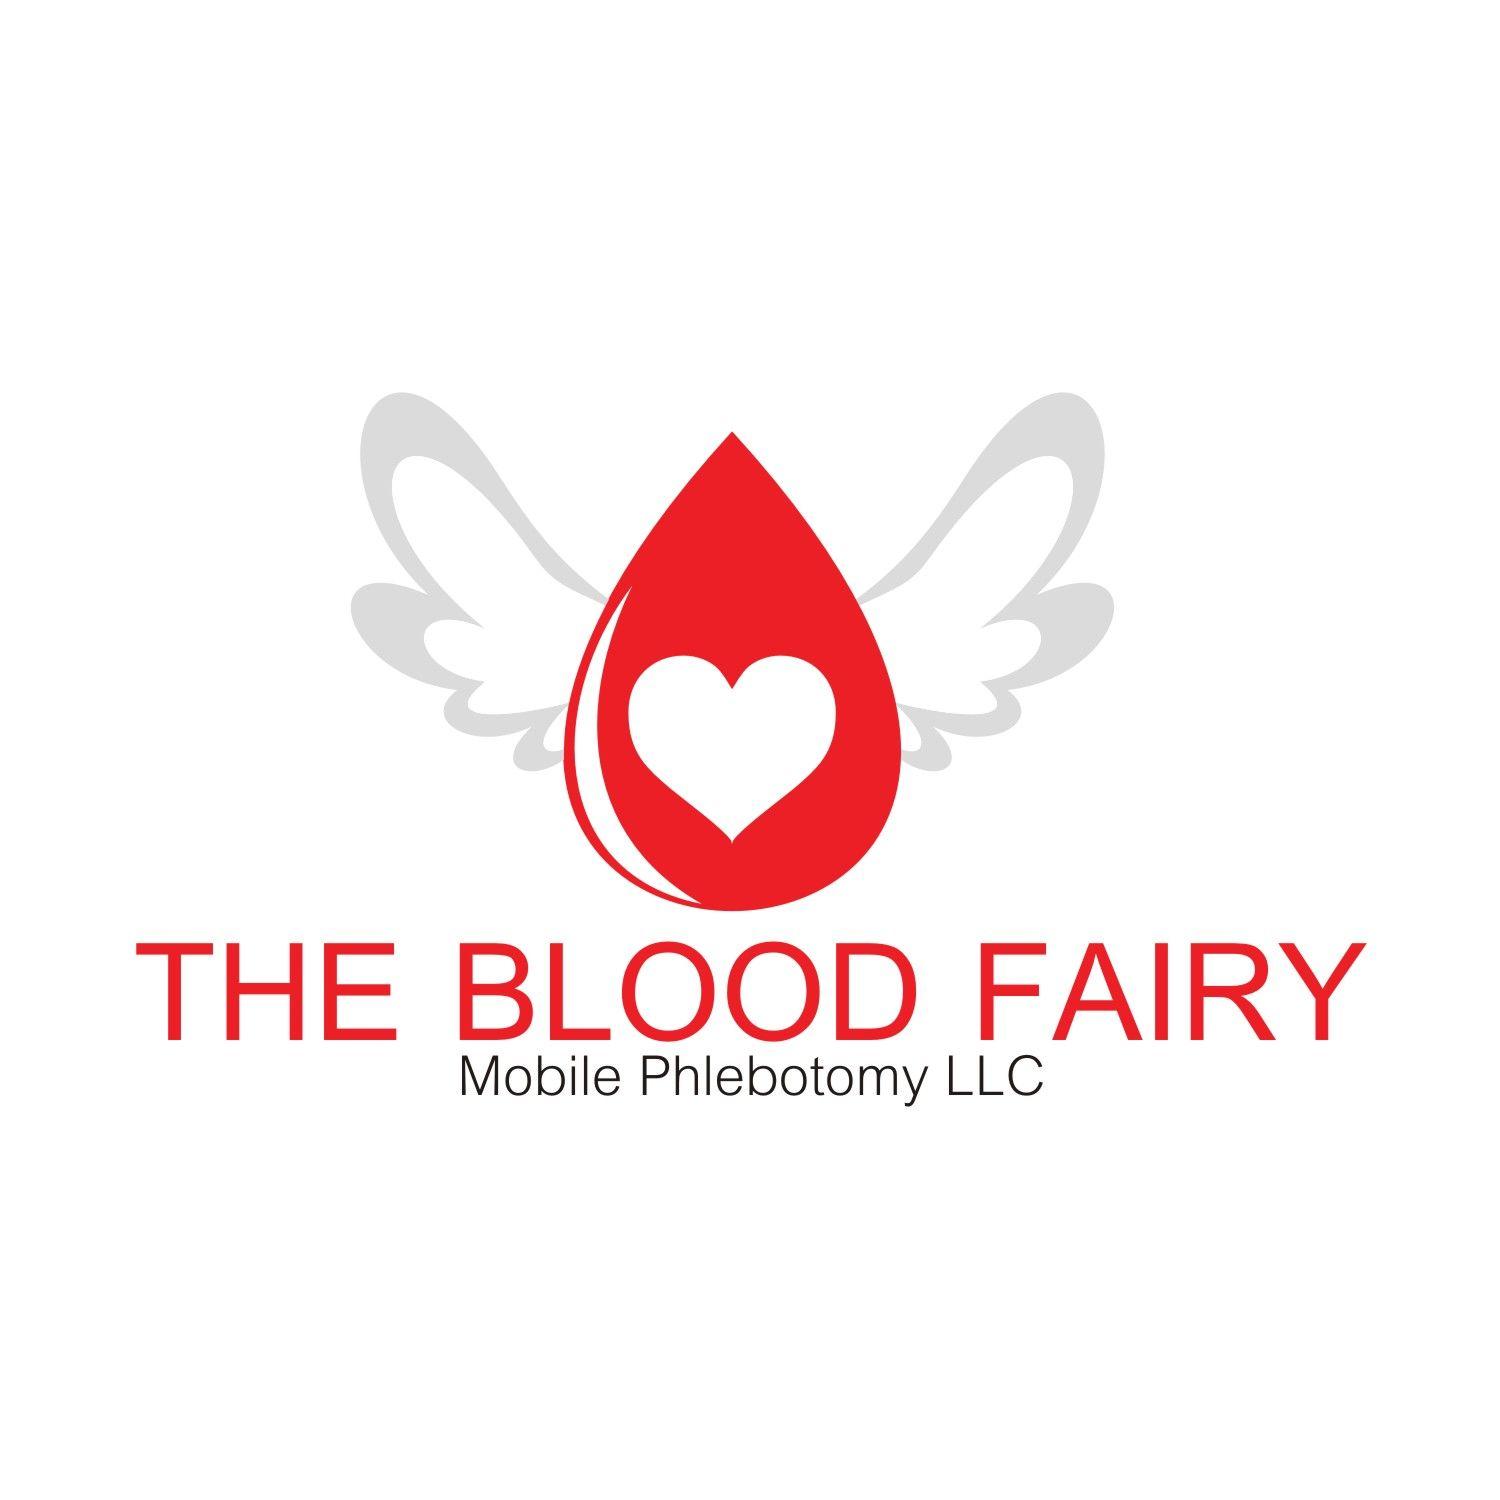 Phlebotomy Logo - Elegant, Playful, Health Care Logo Design for The Blood Fairy Mobile